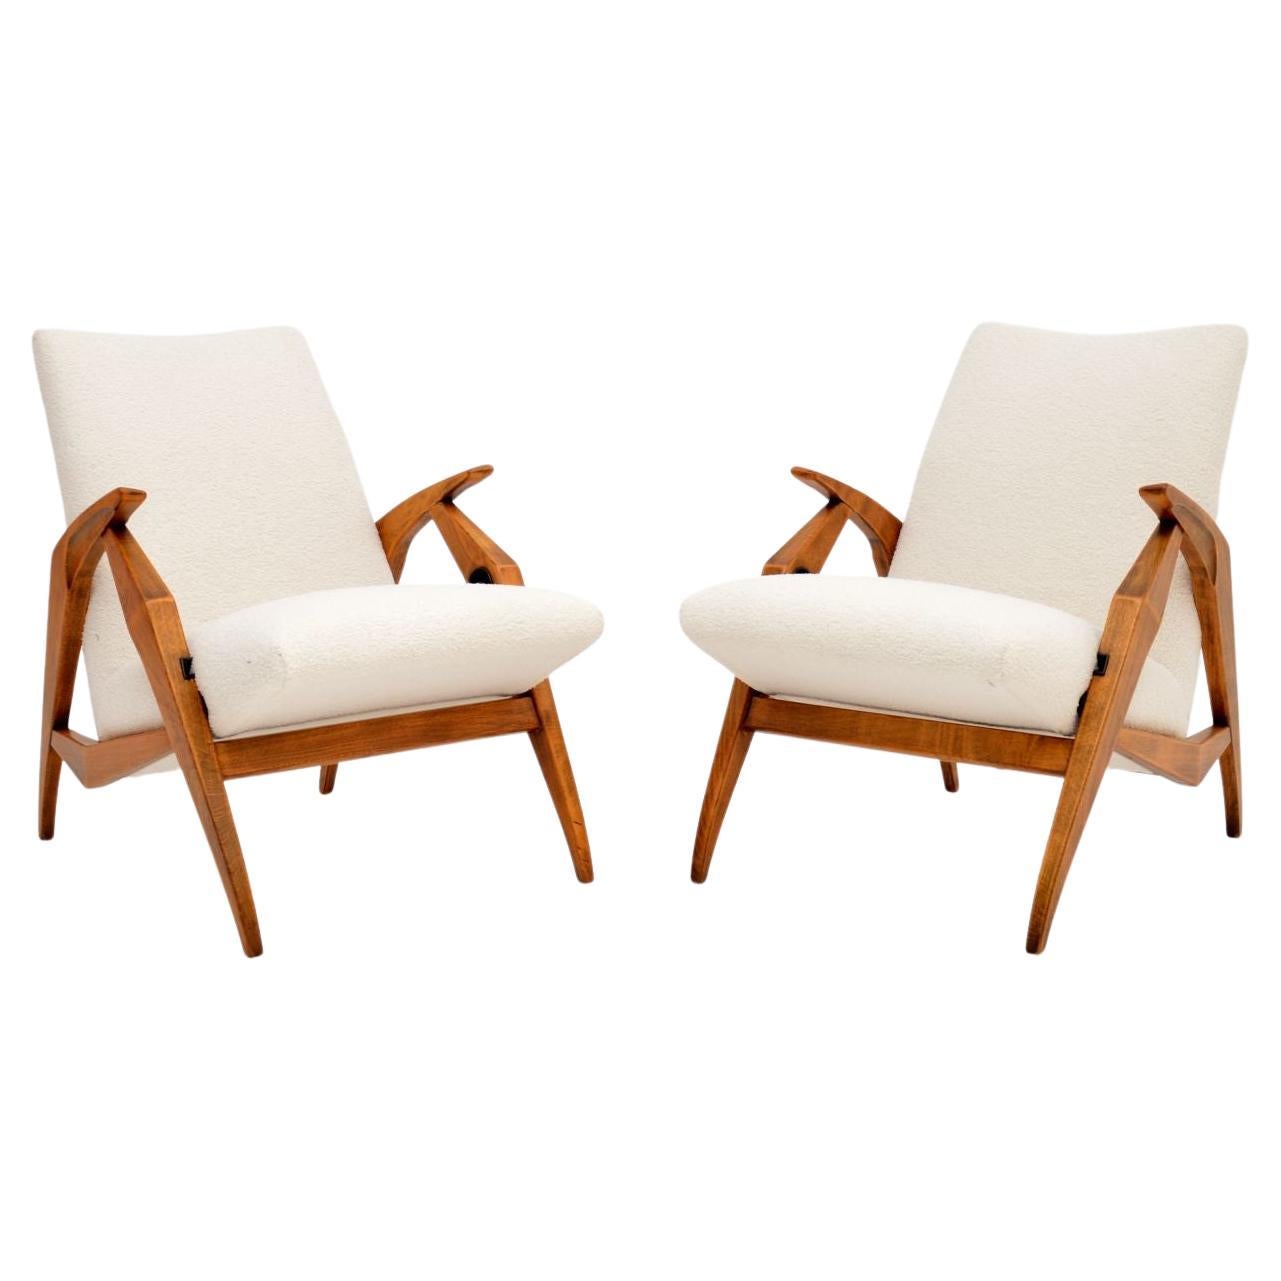 Pair of Vintage Italian Metamorphic Armchairs / Dining Chairs